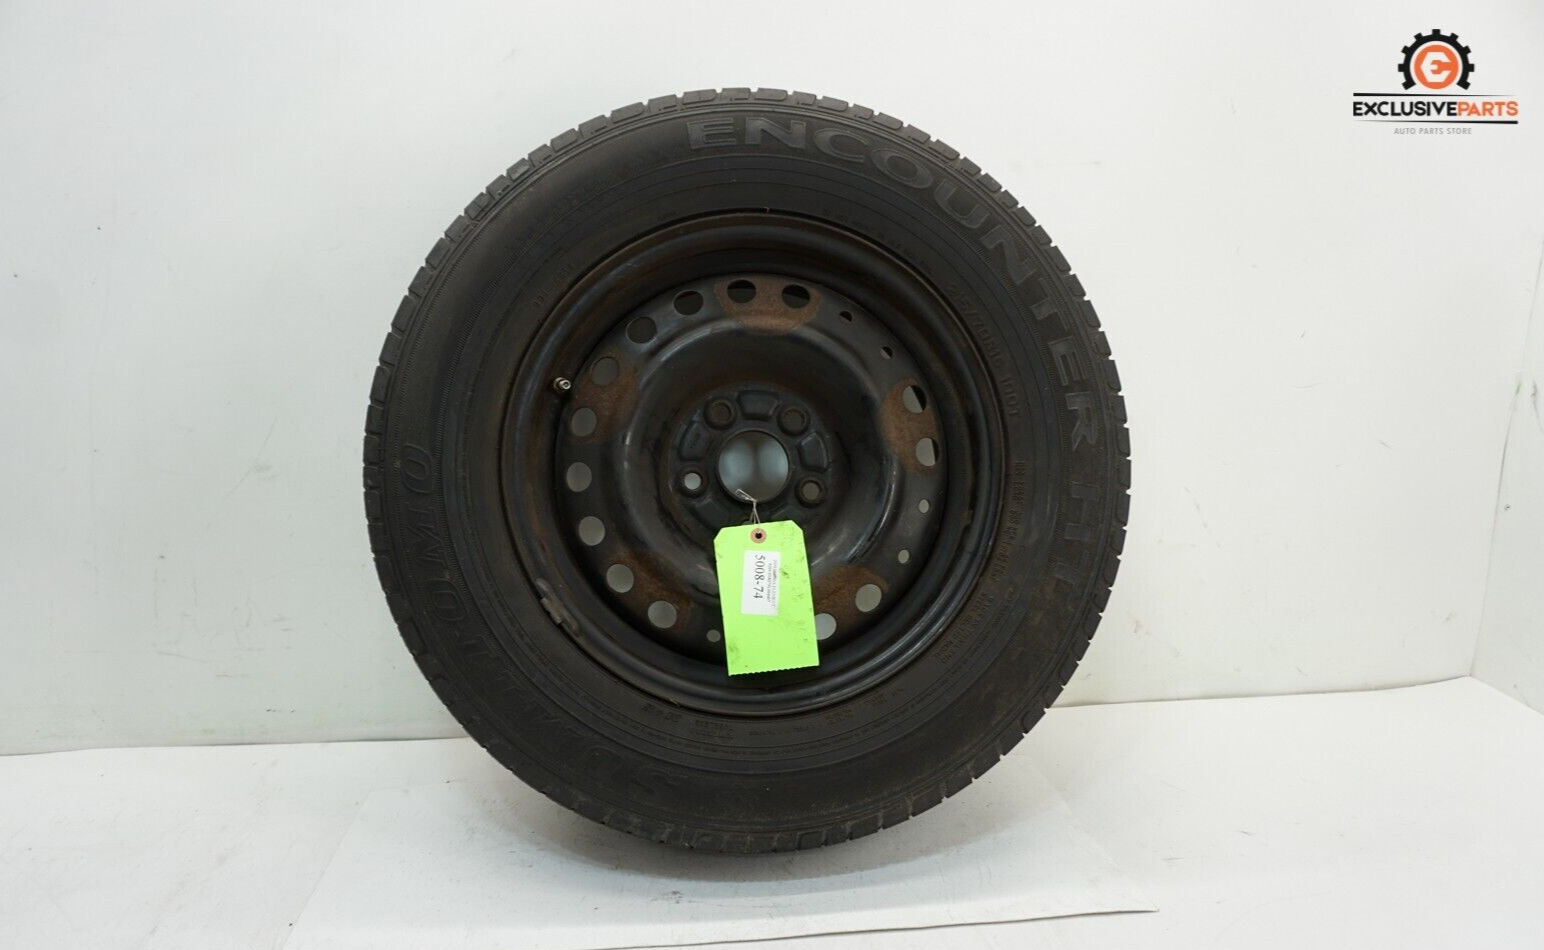 03-11 Honda Element LX OEM Wheel Rim & Tire SUMITOMO 215/70ZR16 100T Black 5008